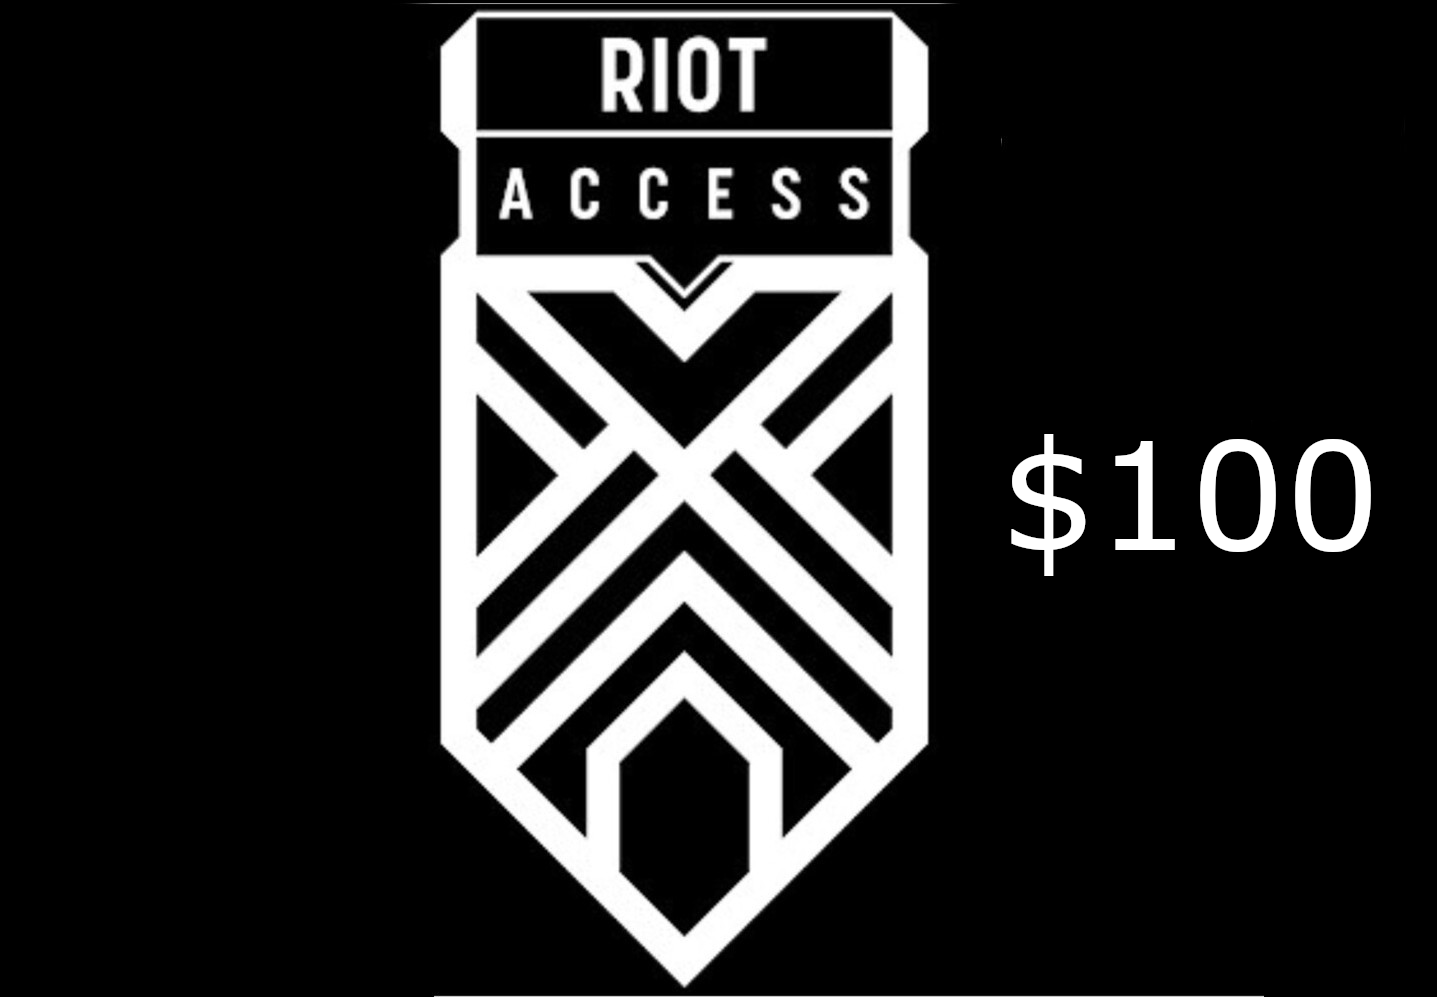 Riot Access $100 Code US